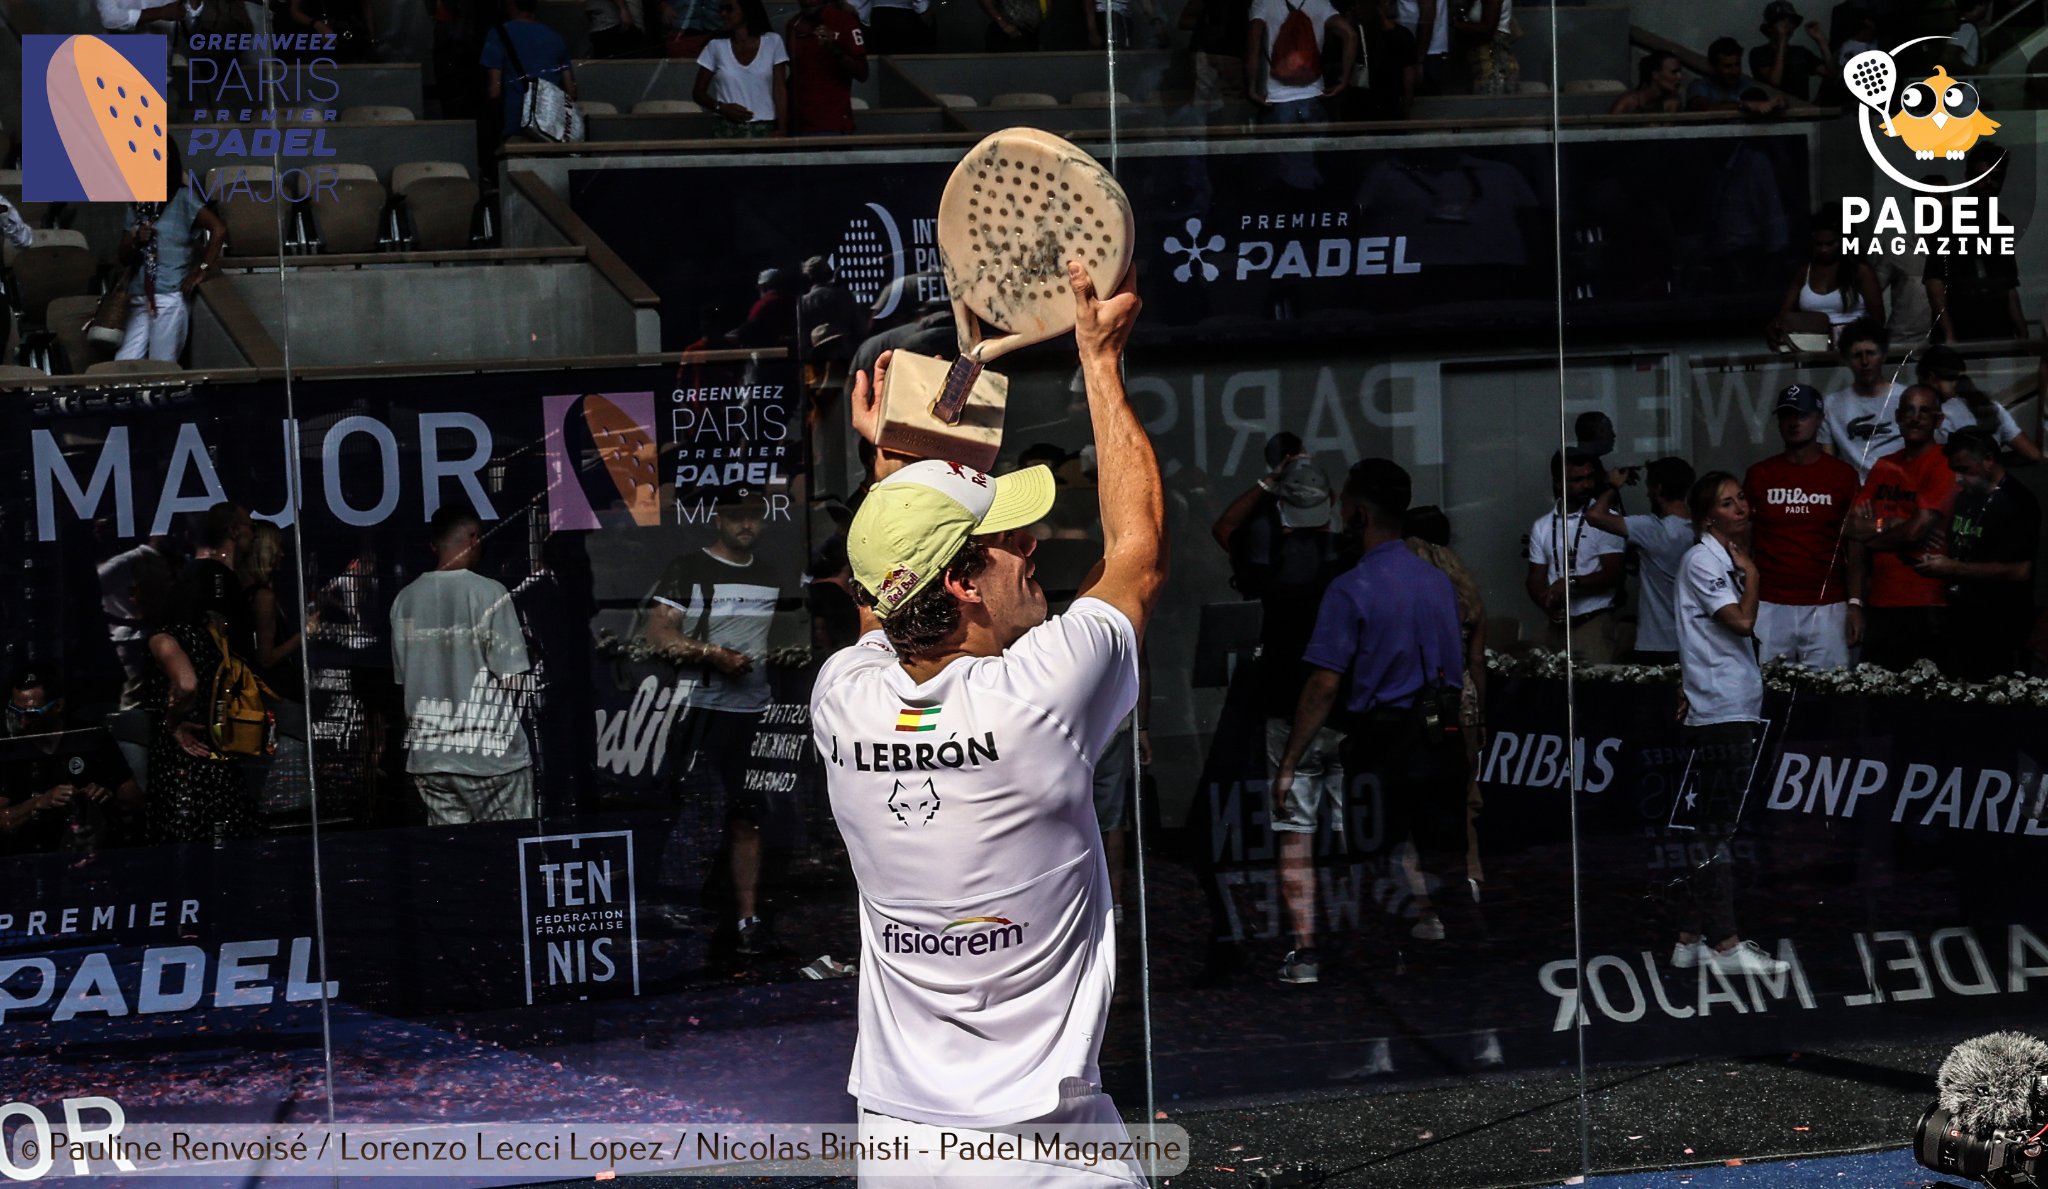 Juan Lebron levanta o troféu